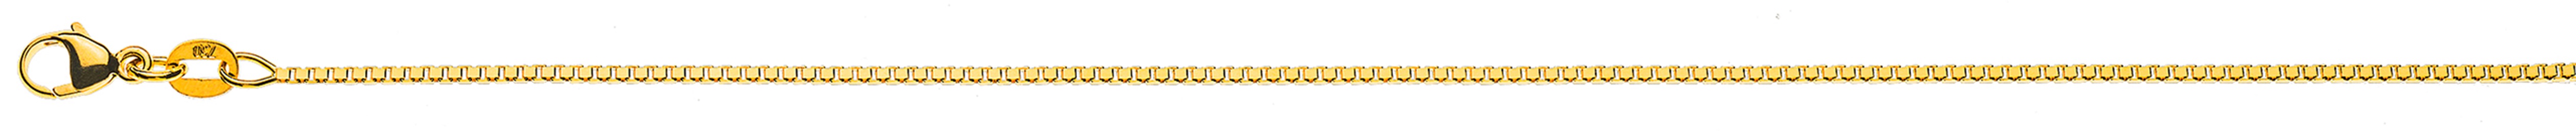 AURONOS Style Necklace yellow gold 9K Venetian chain diamond cut 50cm 1.1mm